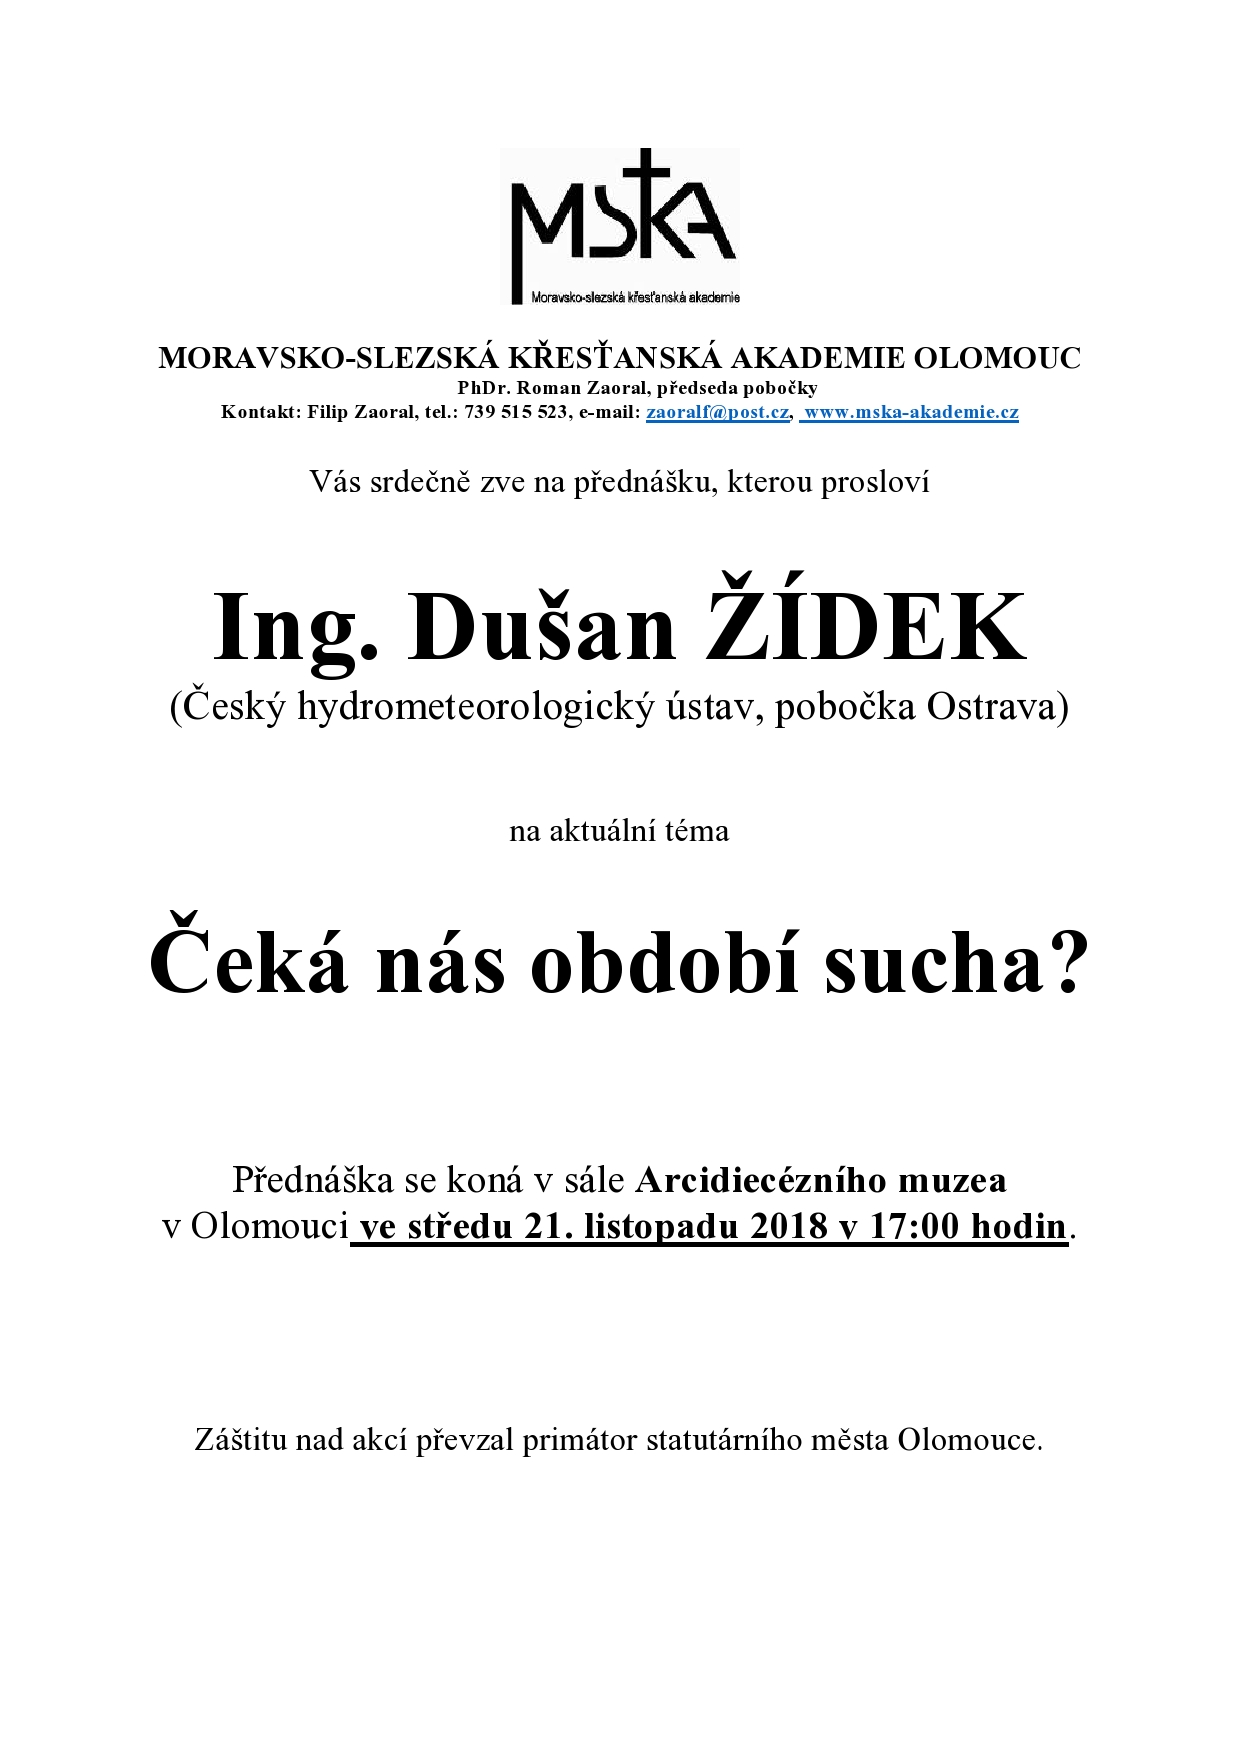 MSKA Olomouc Žídek page0001